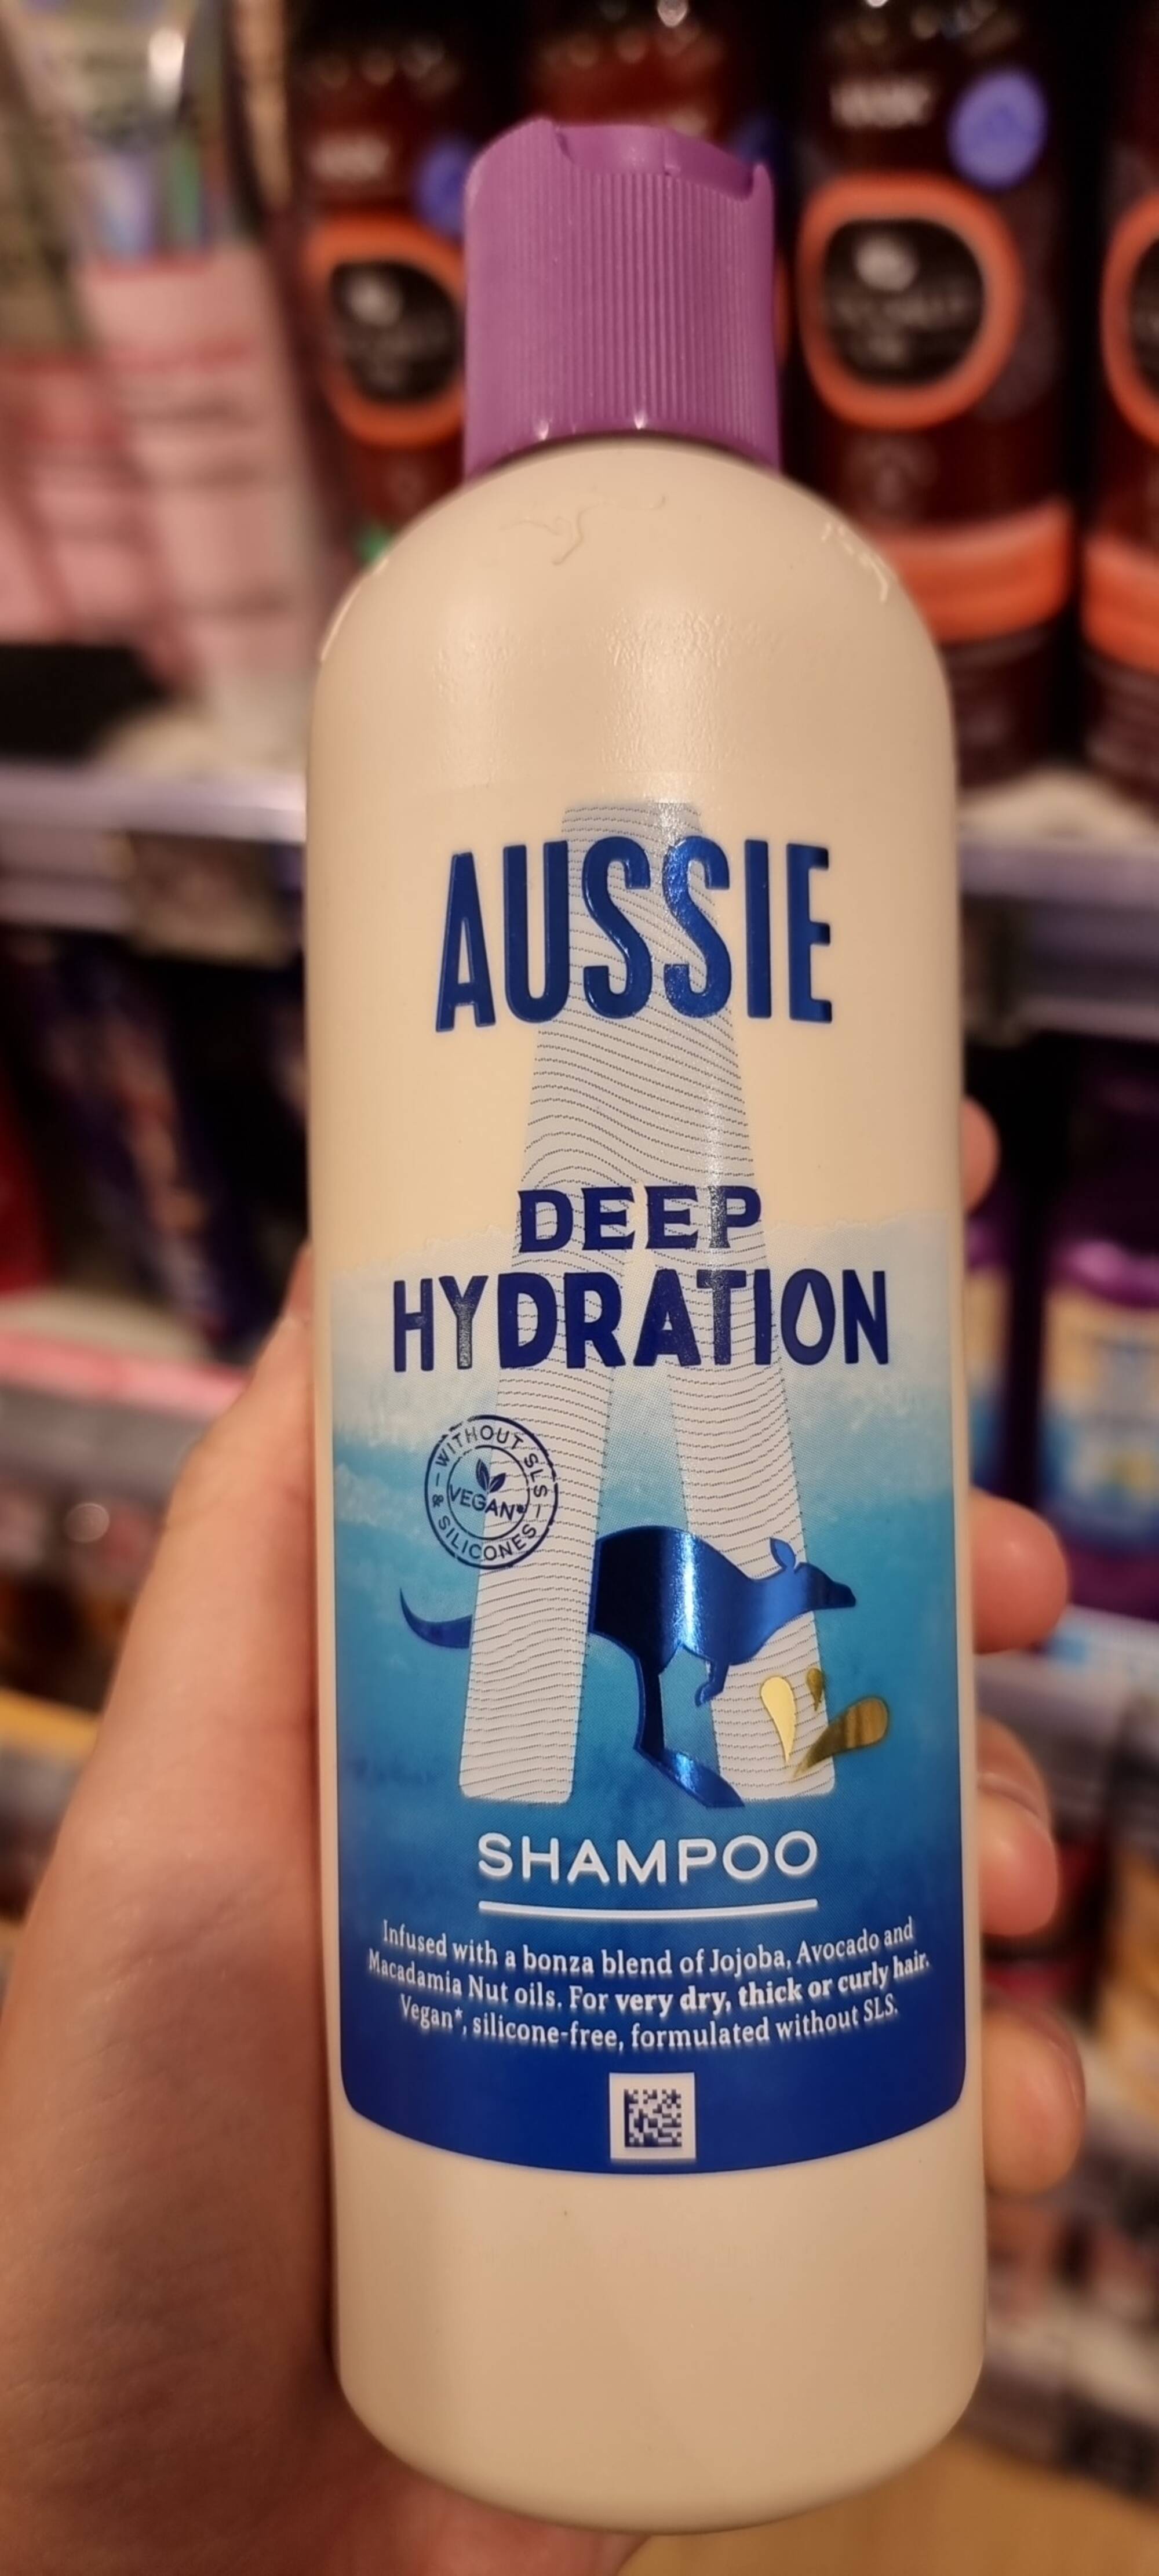 AUSSIE - Deep hydration shampoo